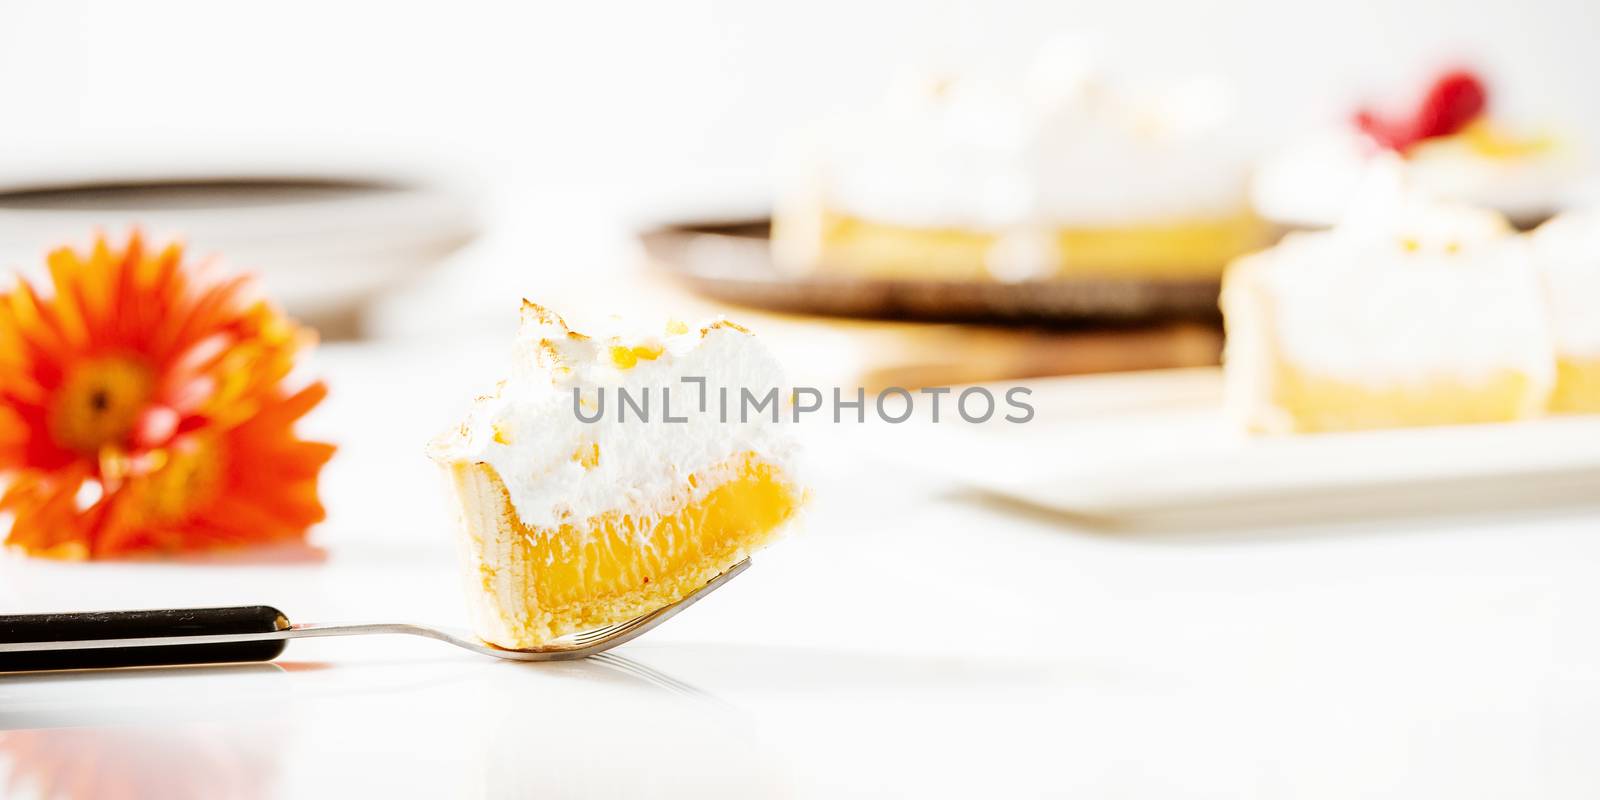 Lemon Meringue Pie by artistrobd